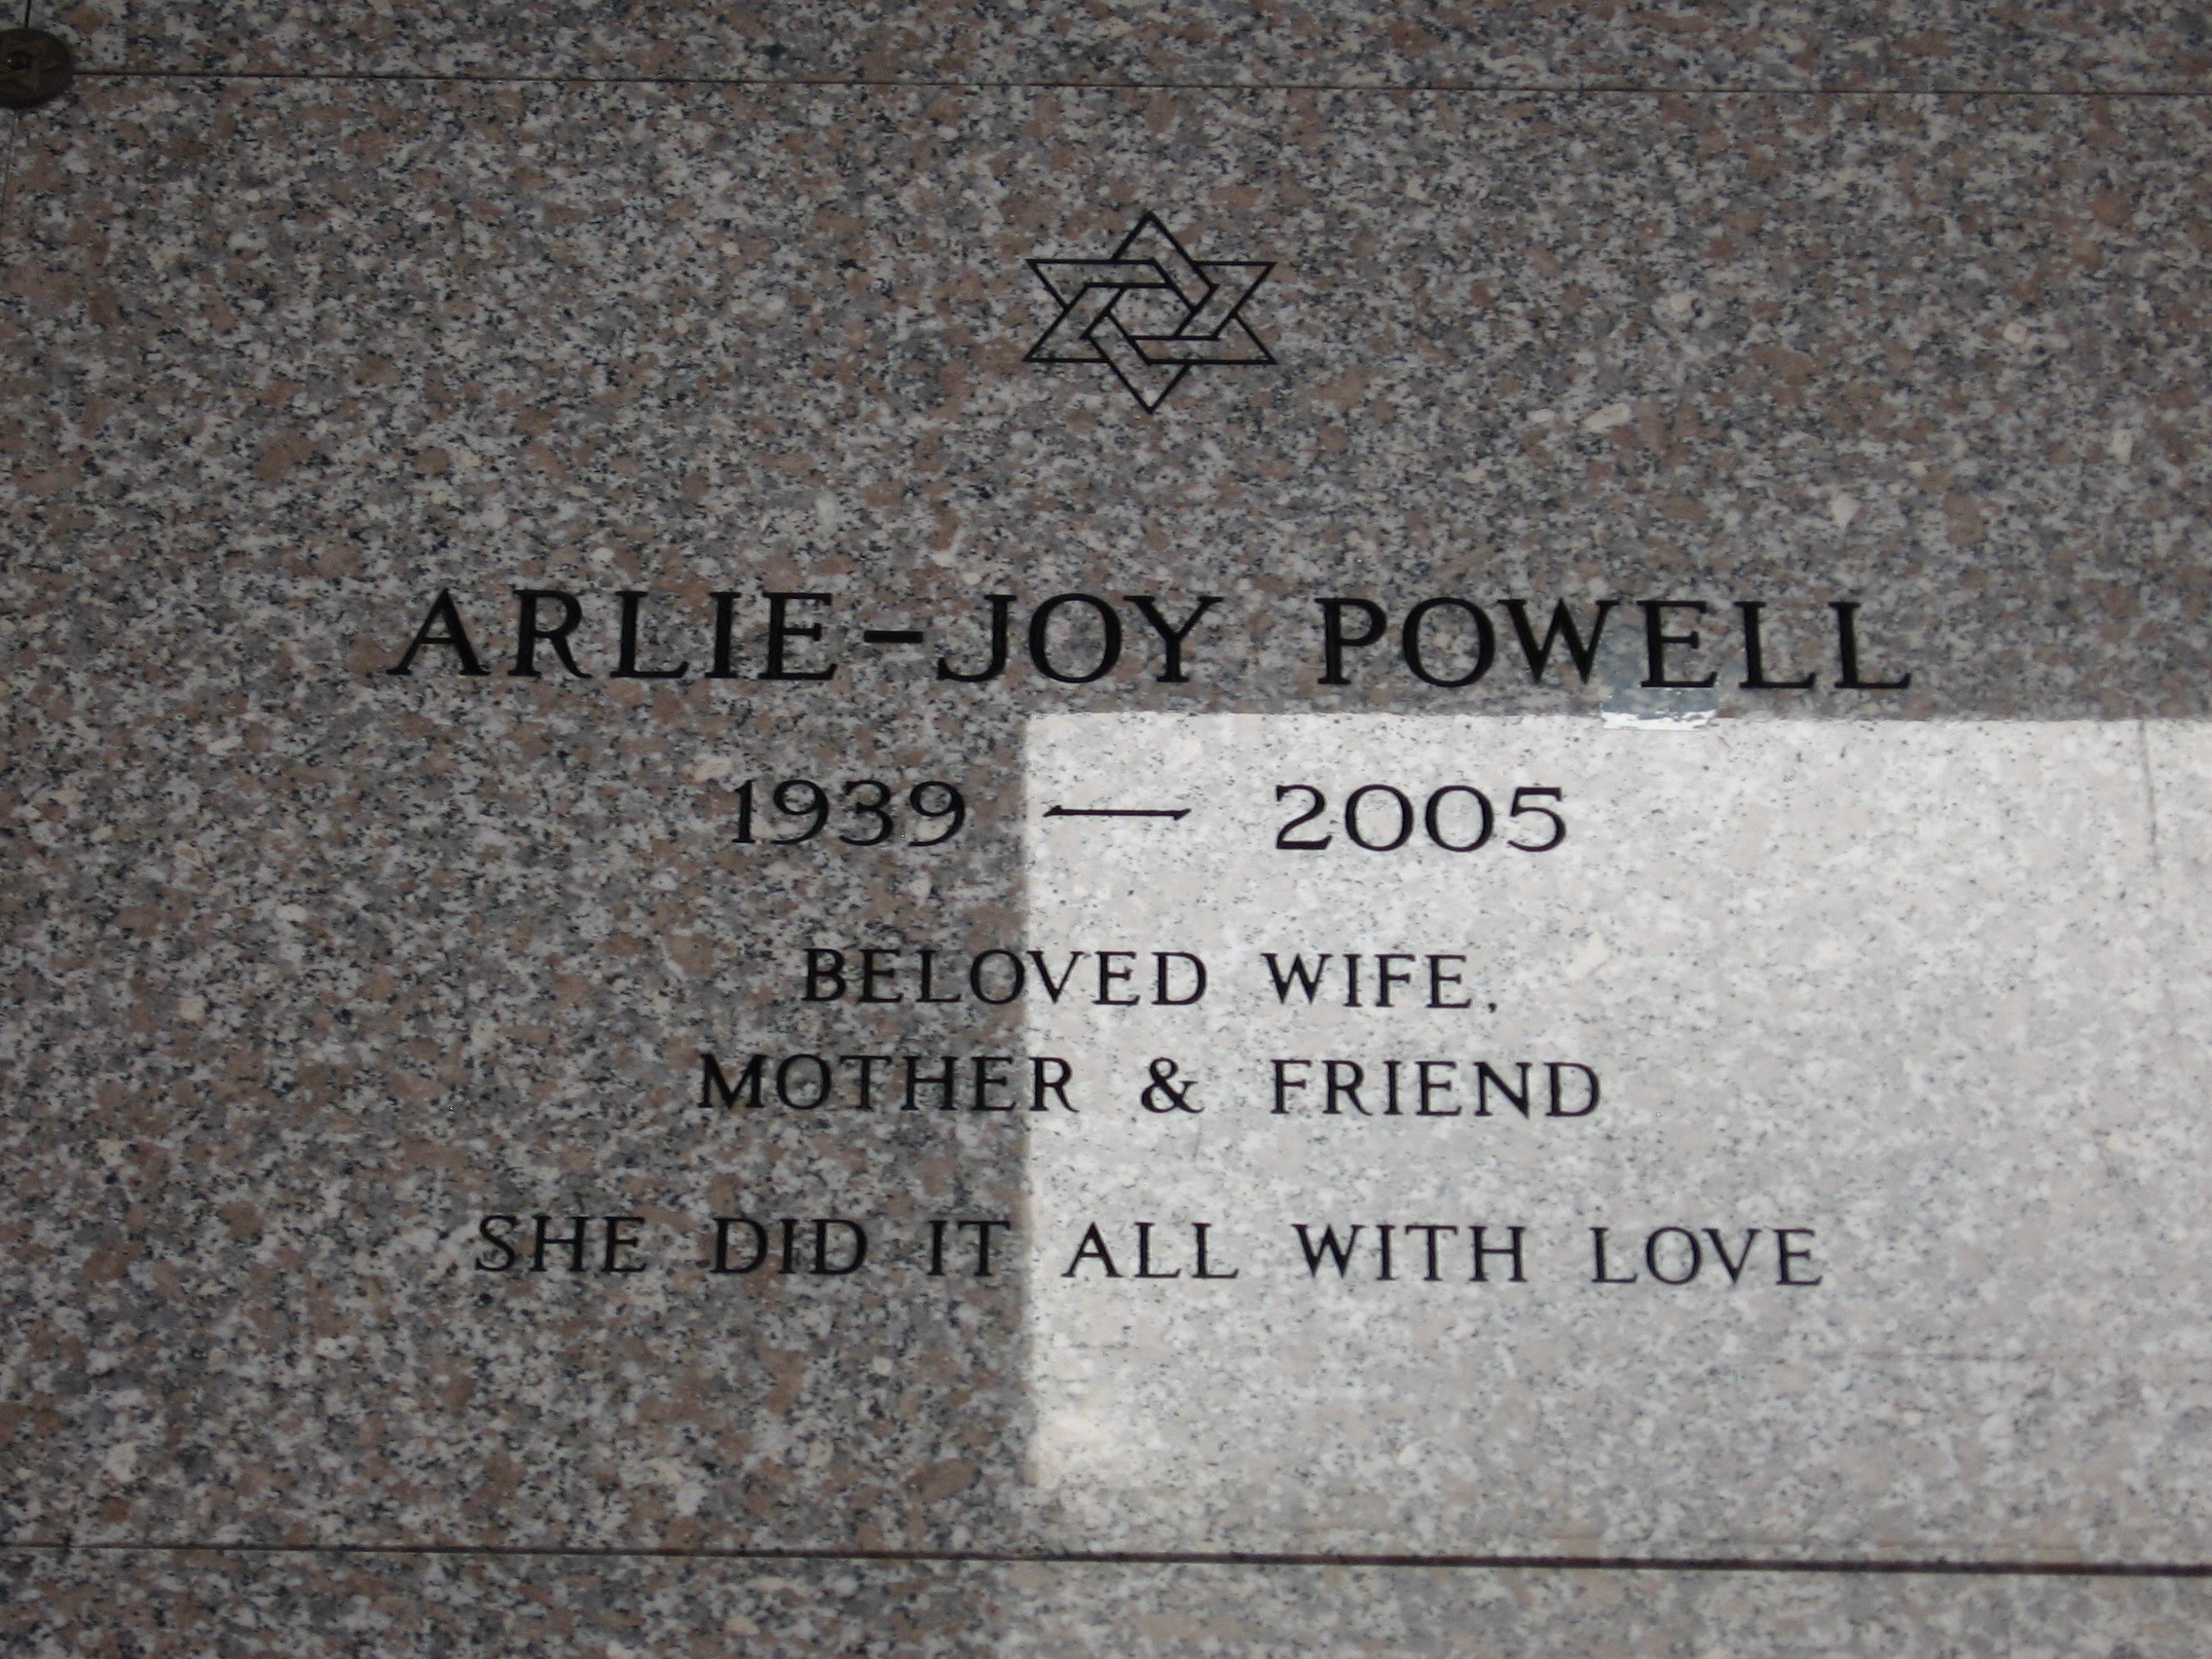 Arlie-Joy Powell